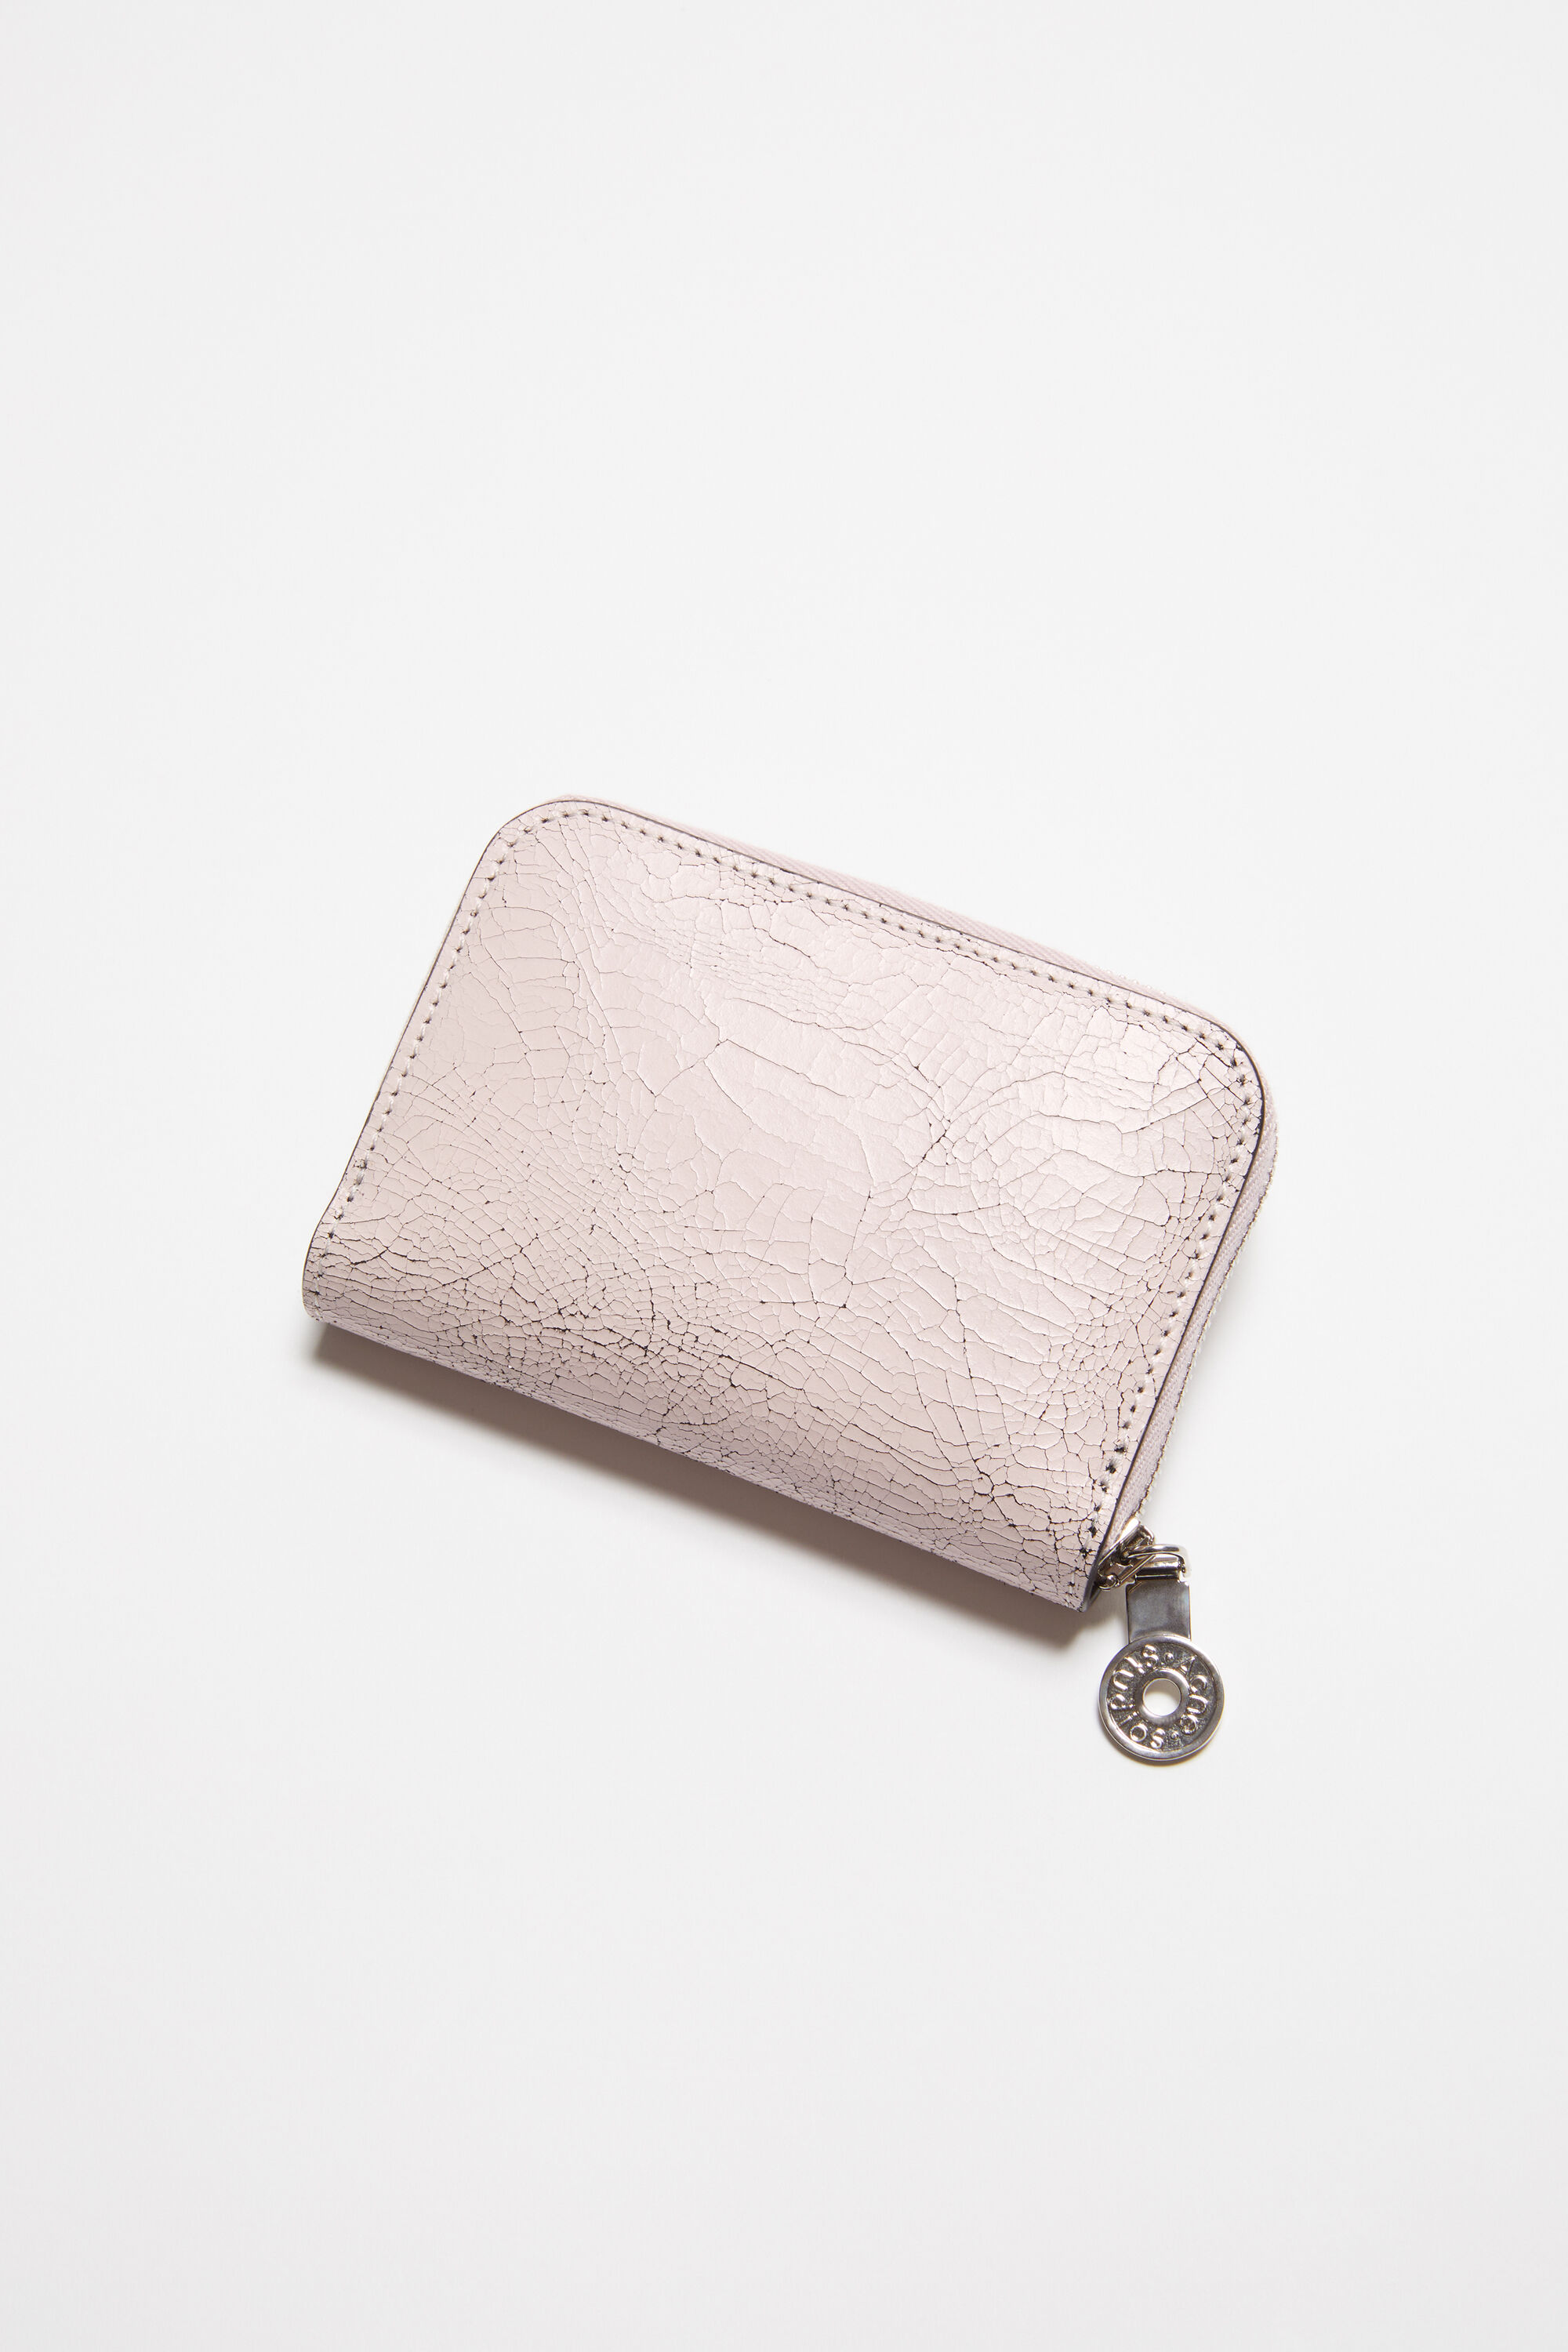 Acne Studios - Leather zip wallet - Pastel pink